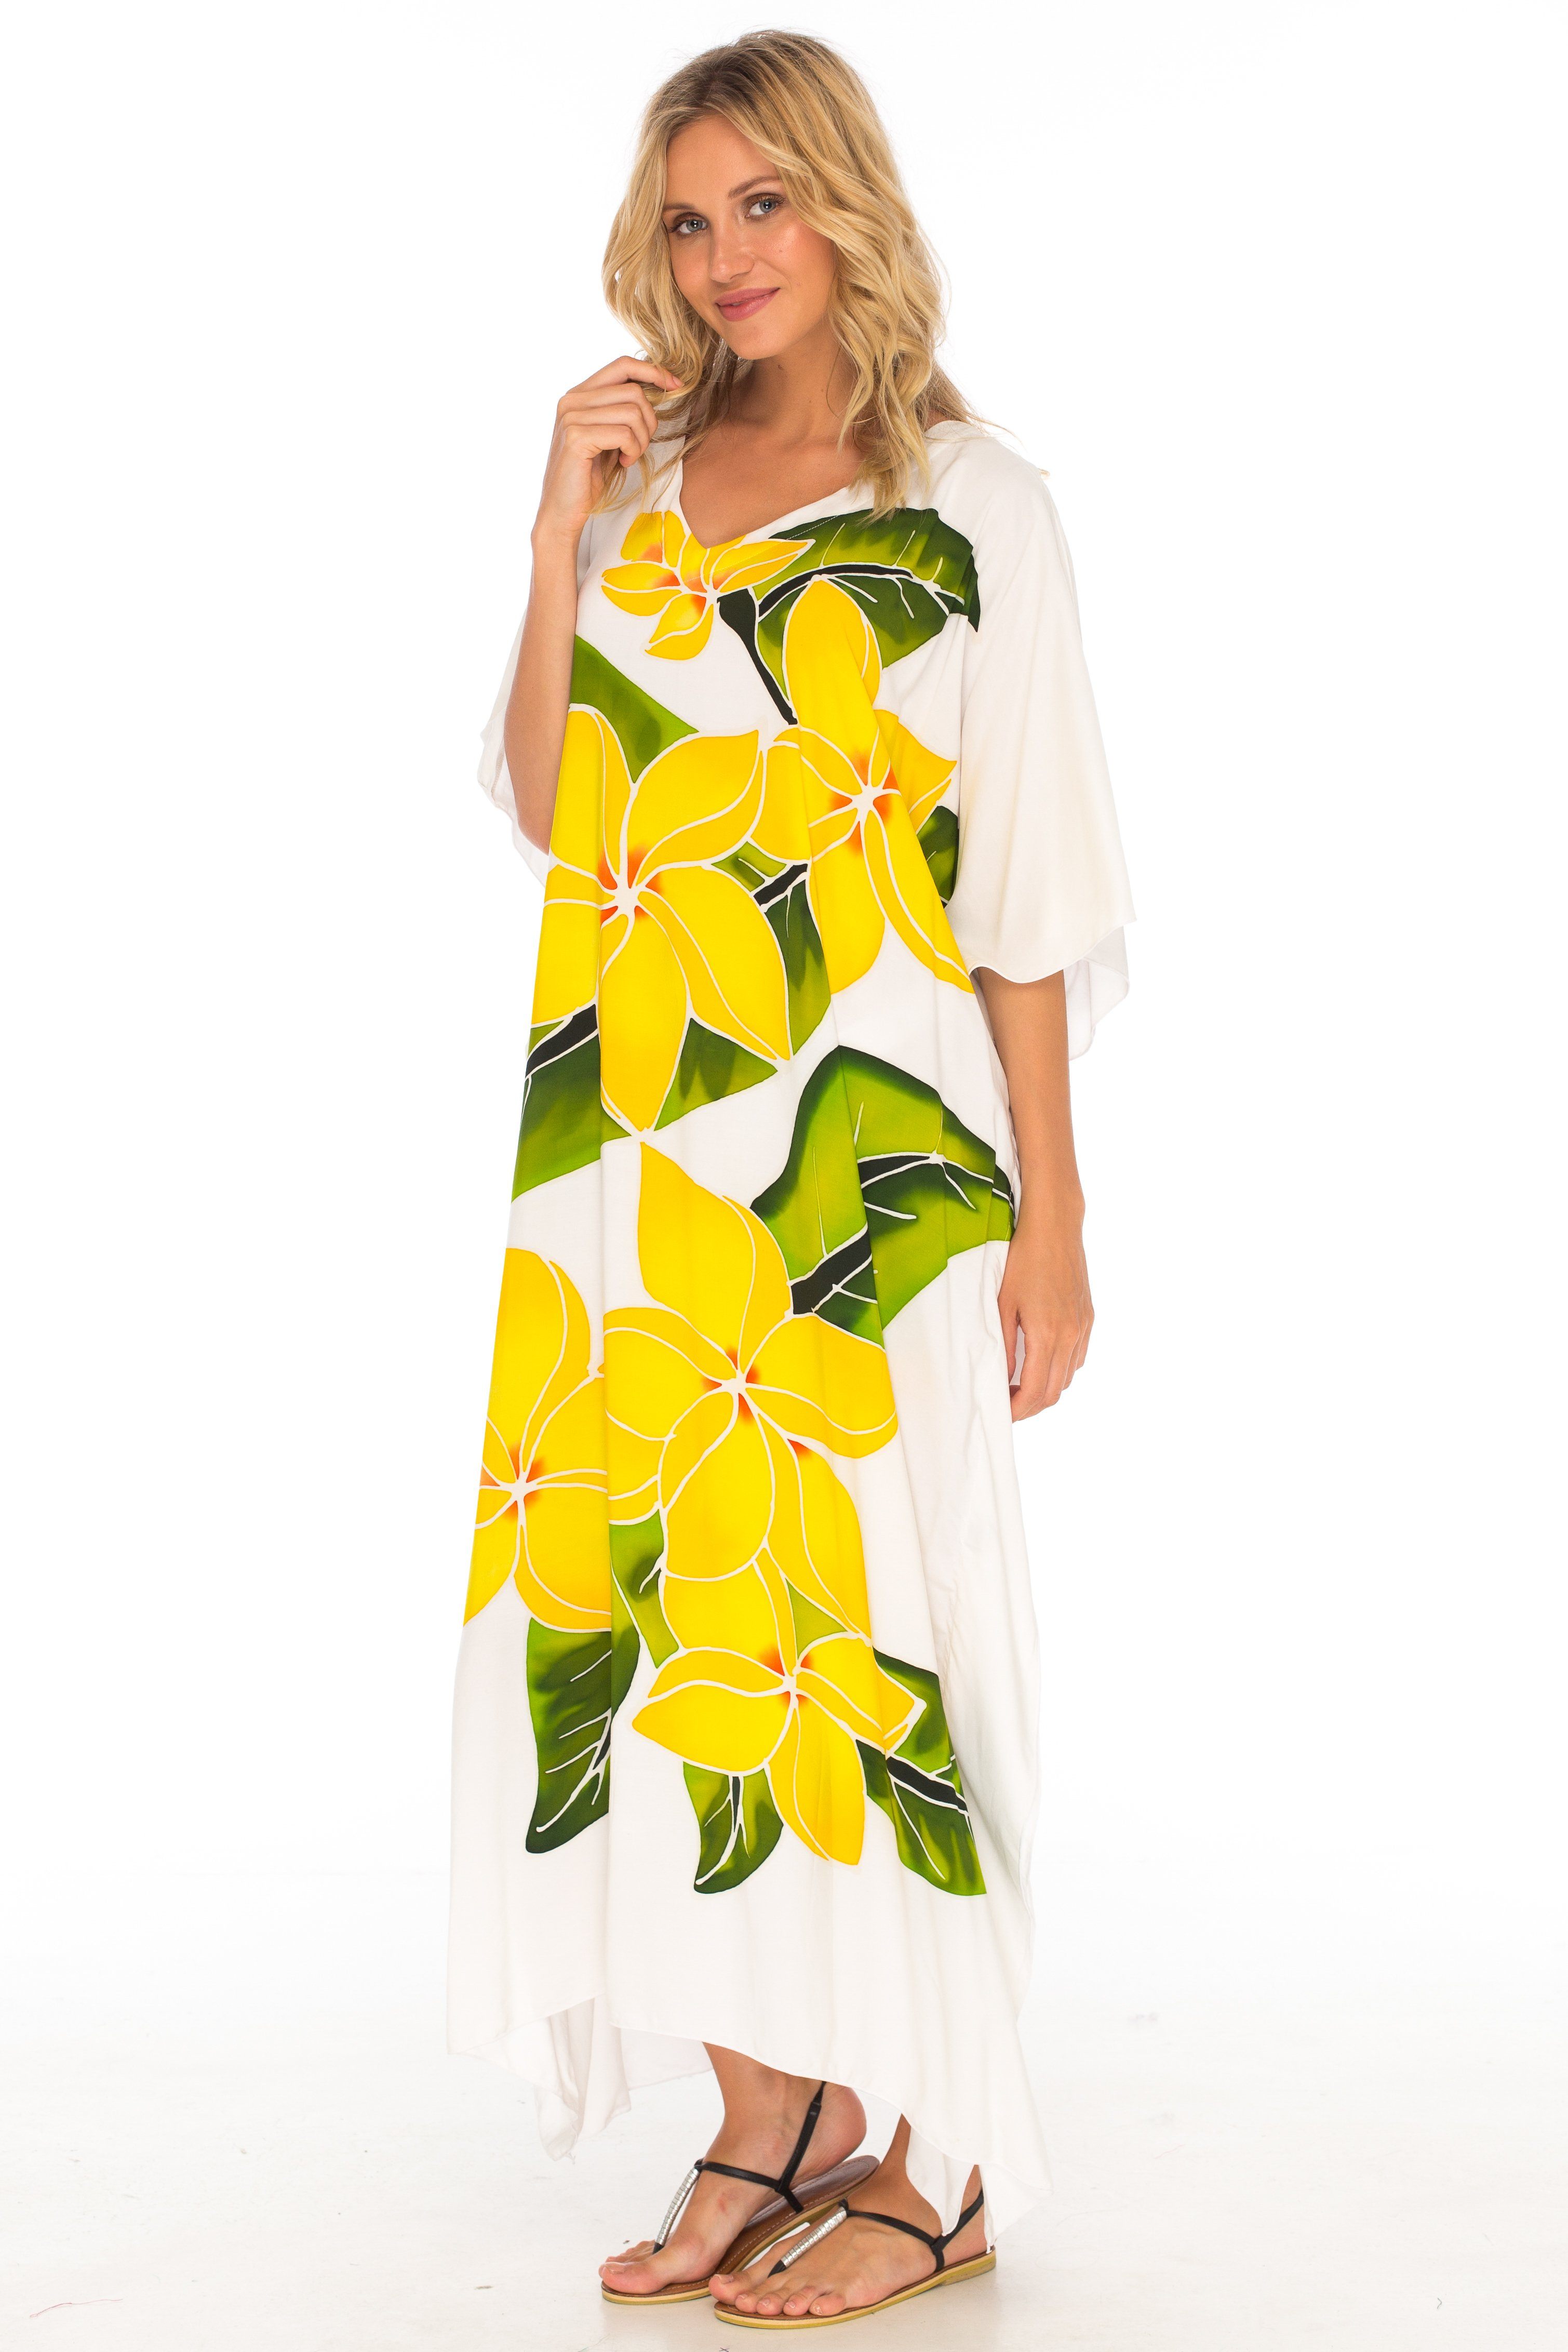 $3495 NEW Marchesa Crysta Beaded Caftan Dress Long Maxi Lemon Pale Yellow  Gown L | eBay